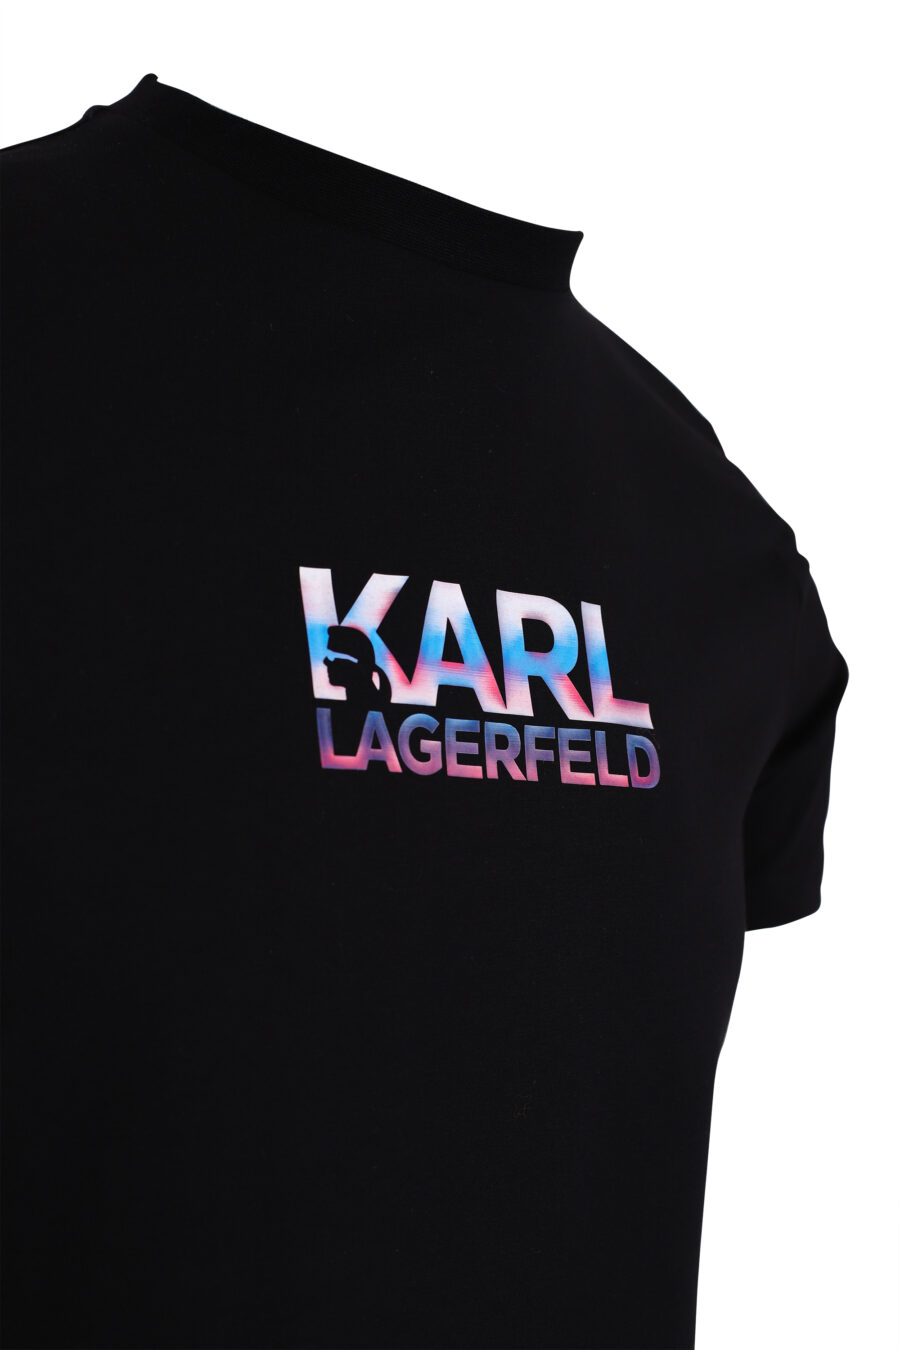 Schwarzes T-Shirt mit Hologramm-Effekt-Logo - IMG 9417